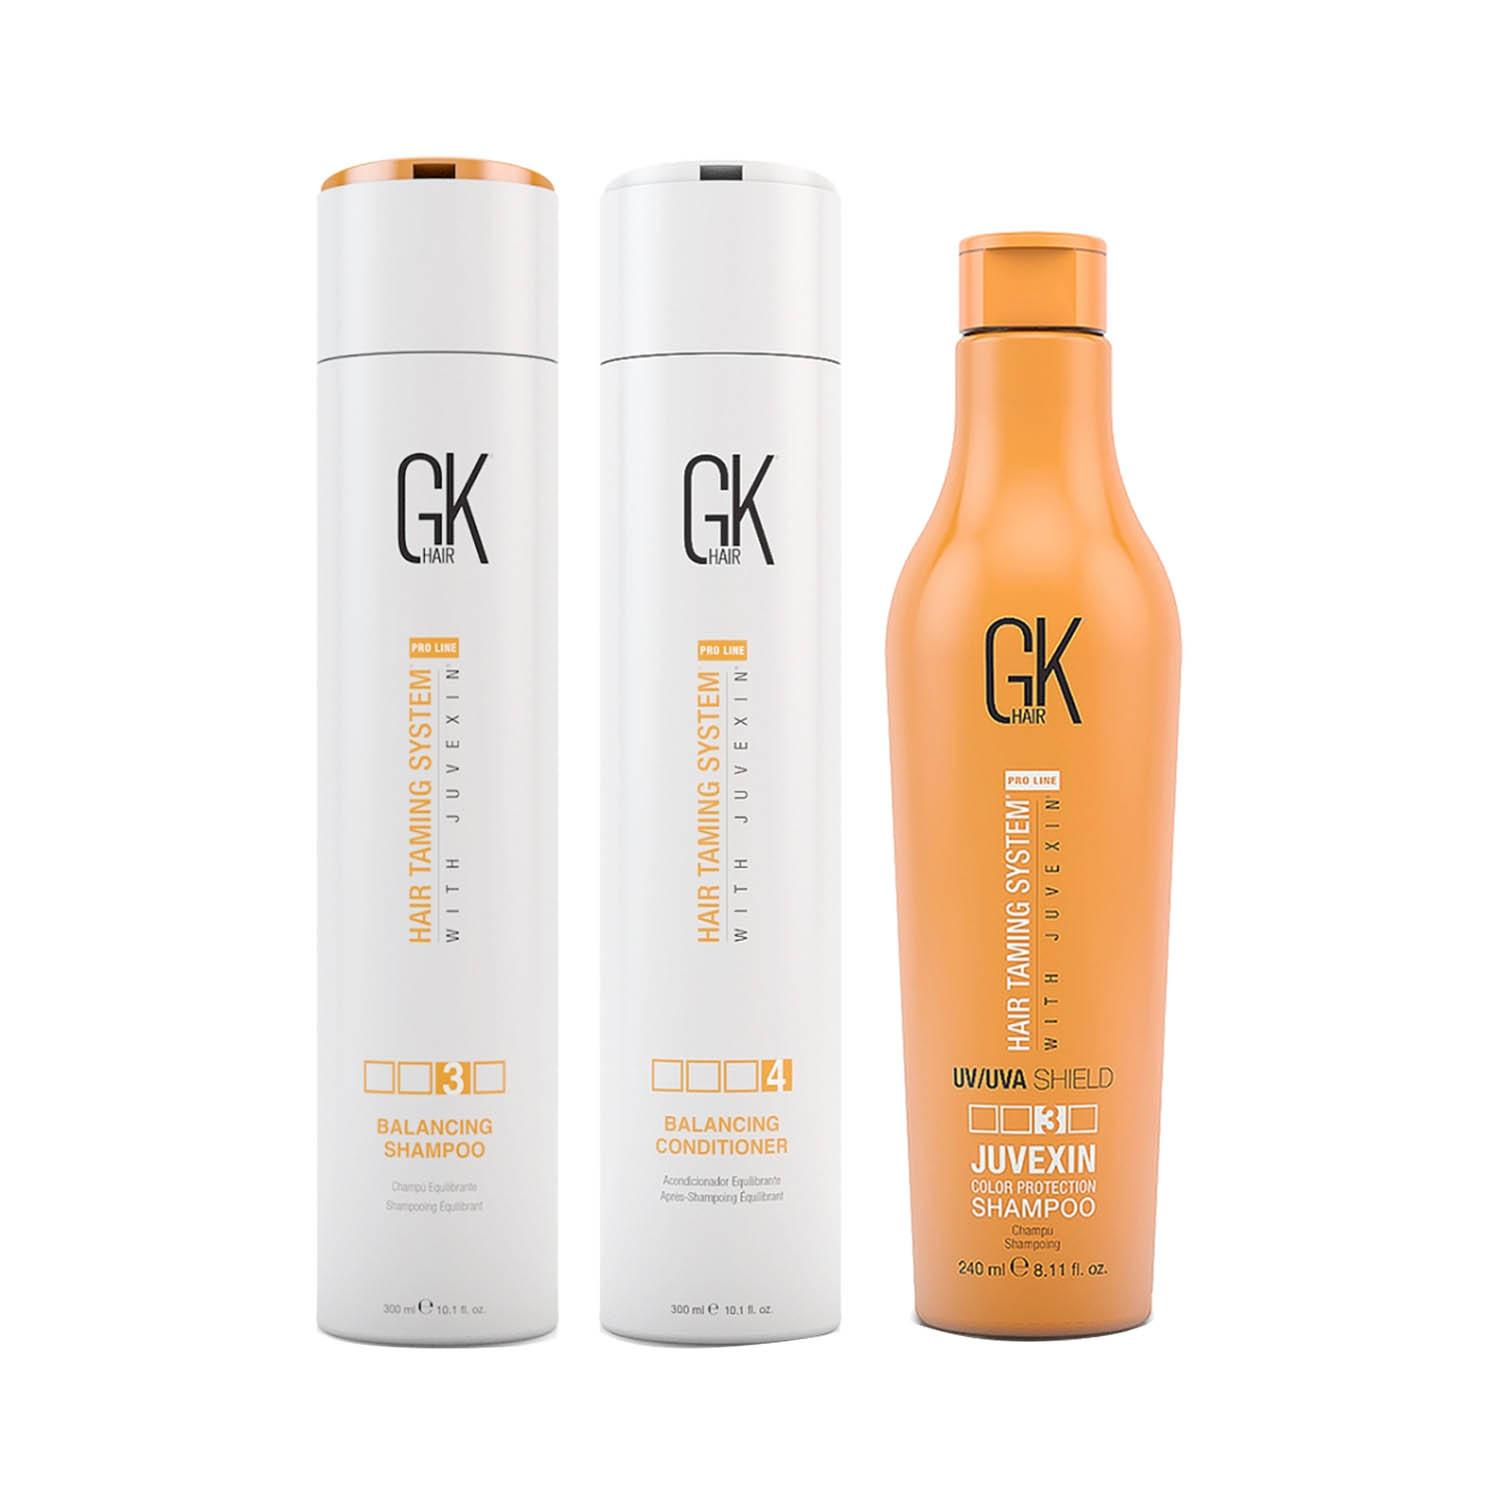 GK Hair | GK Hair Balancing Shampoo and Conditioner 300ml with Color Shield Shampoo 240m